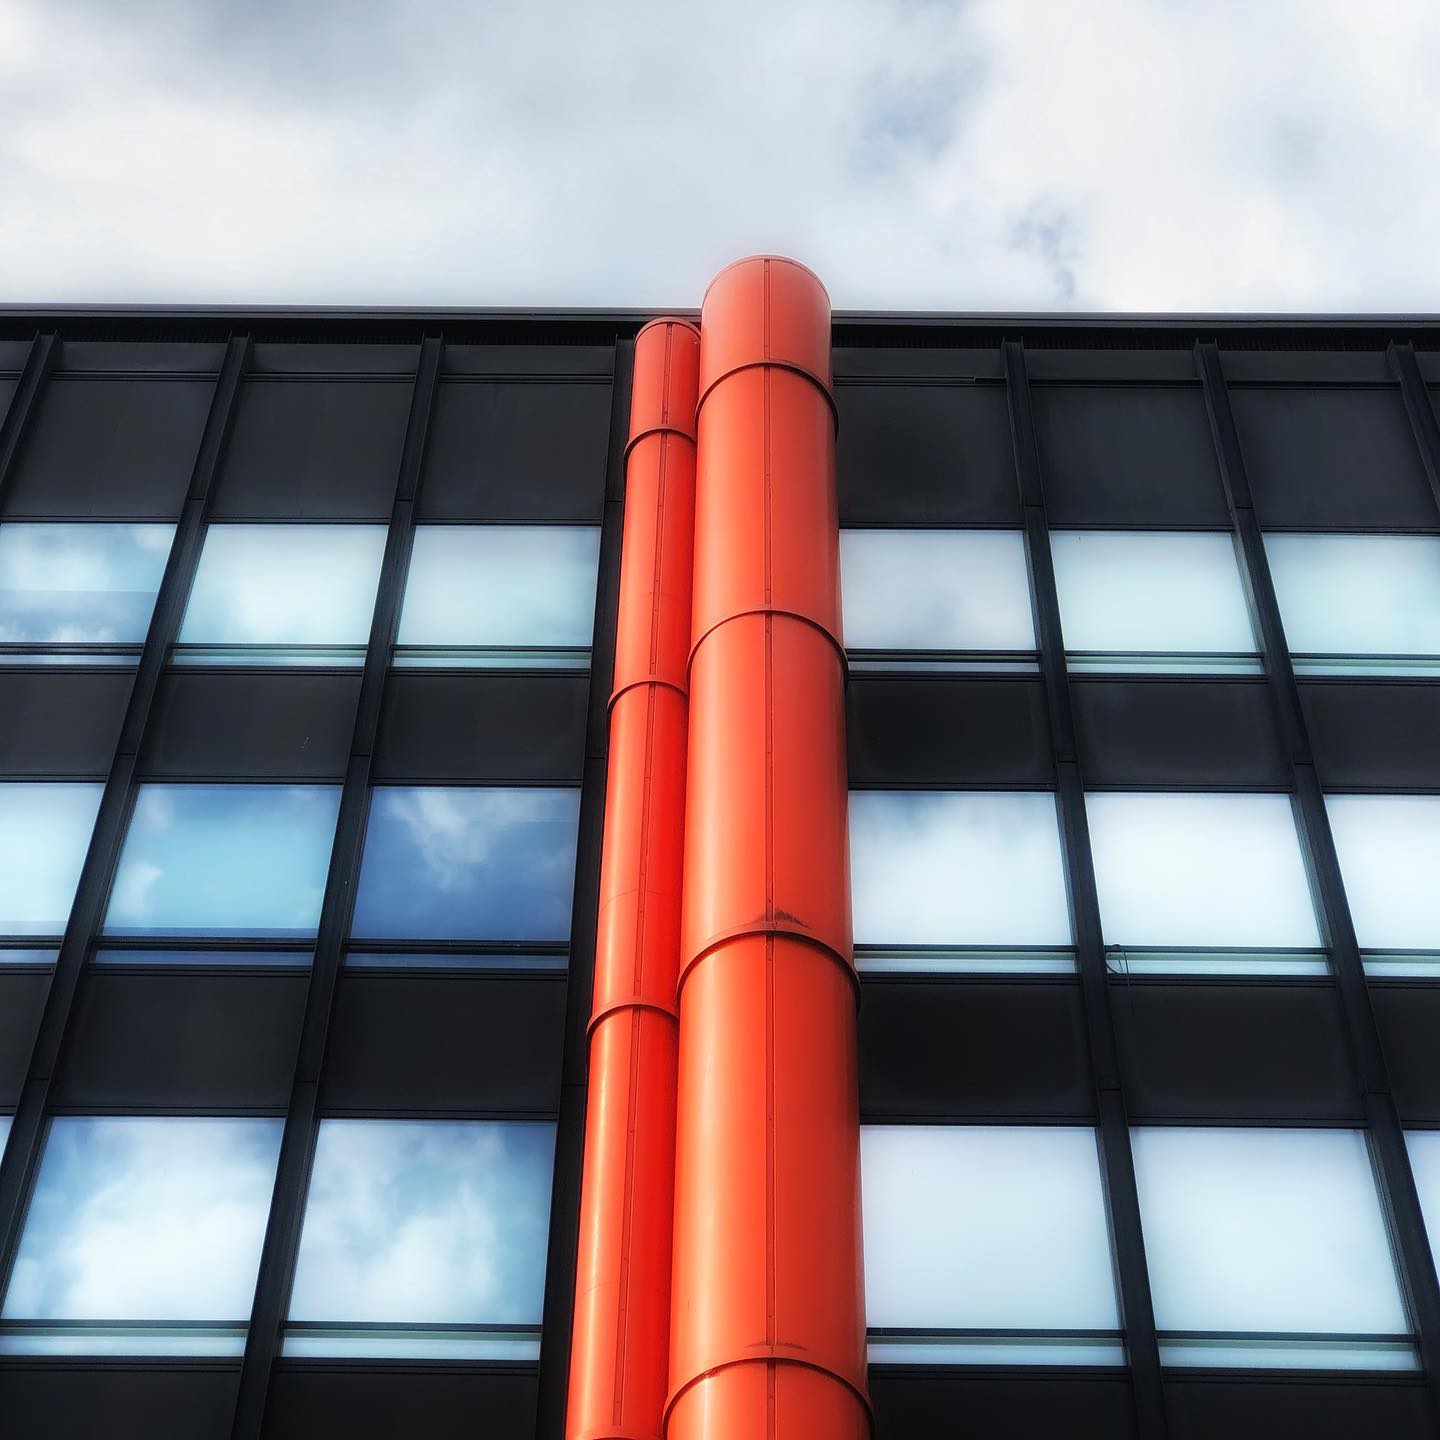 Orange 🟧
#urbanphotography #urbanarchitecture #cloudy #minimal #orange #sky